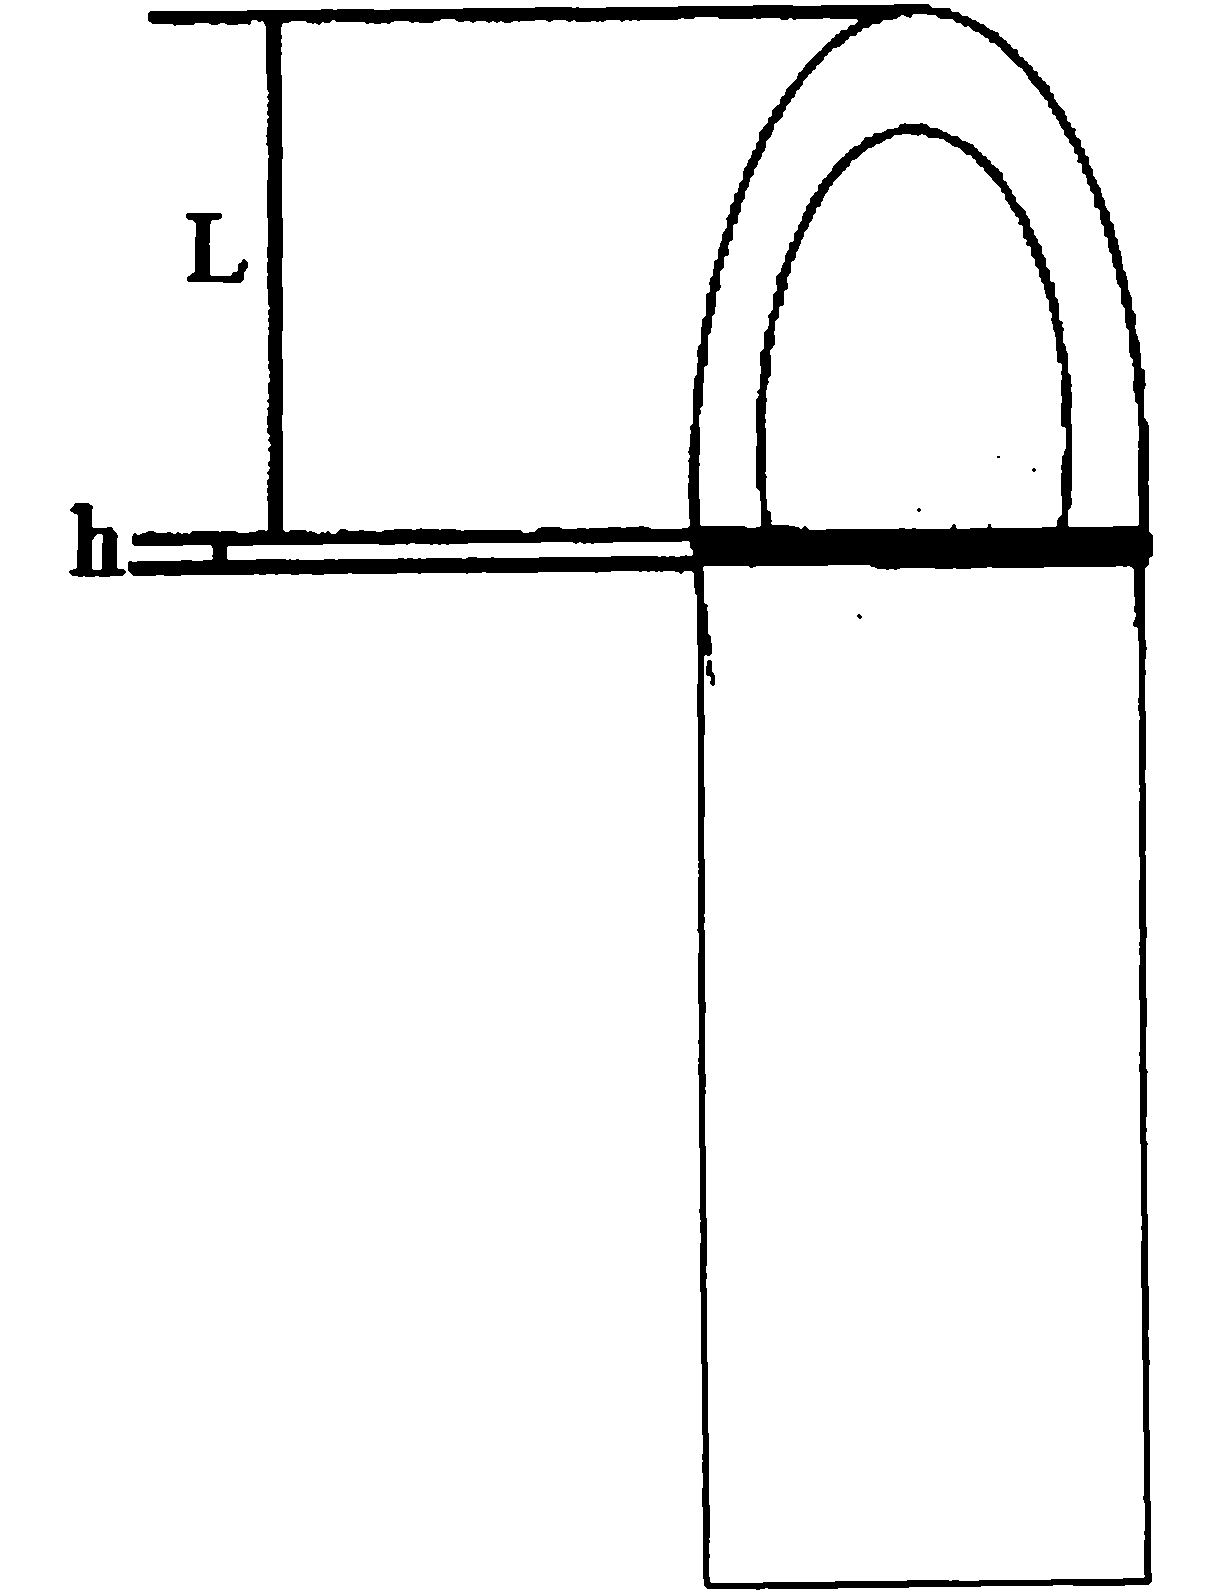 Method for measuring dimension of cigarette burning cone shape